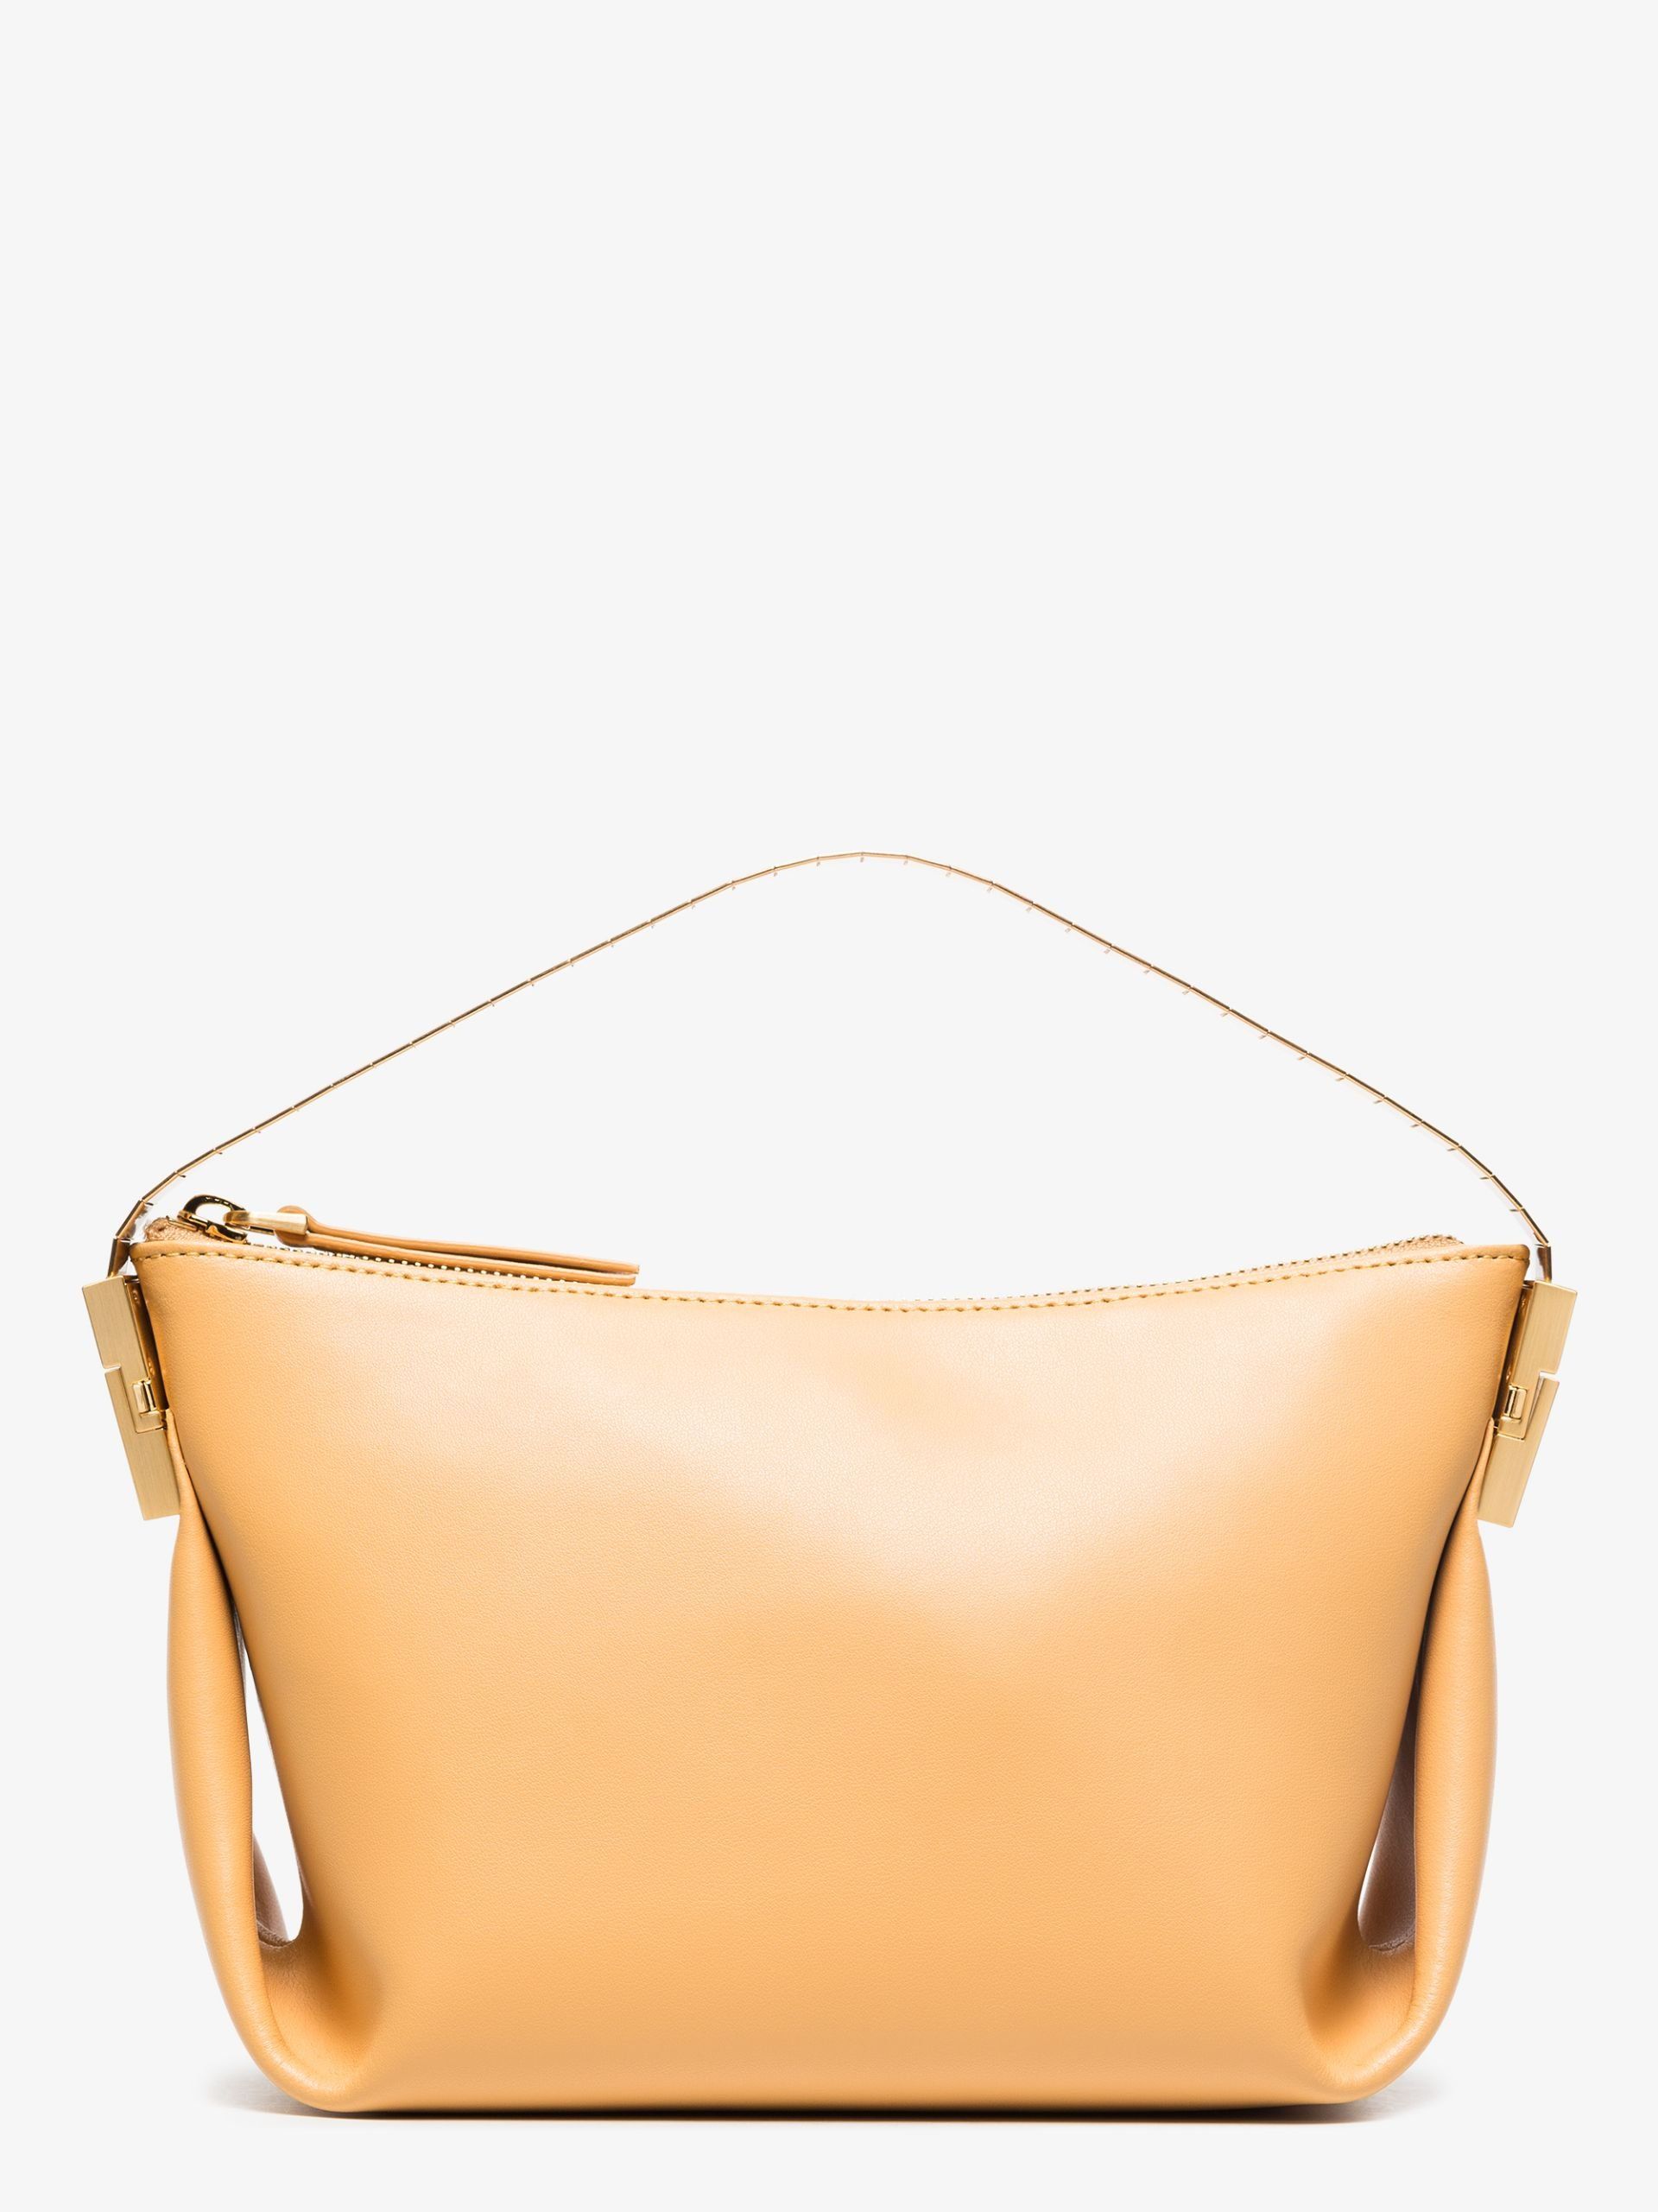 13 of the Most Affordable Designer Handbag Brands for Budget-Friendly Style